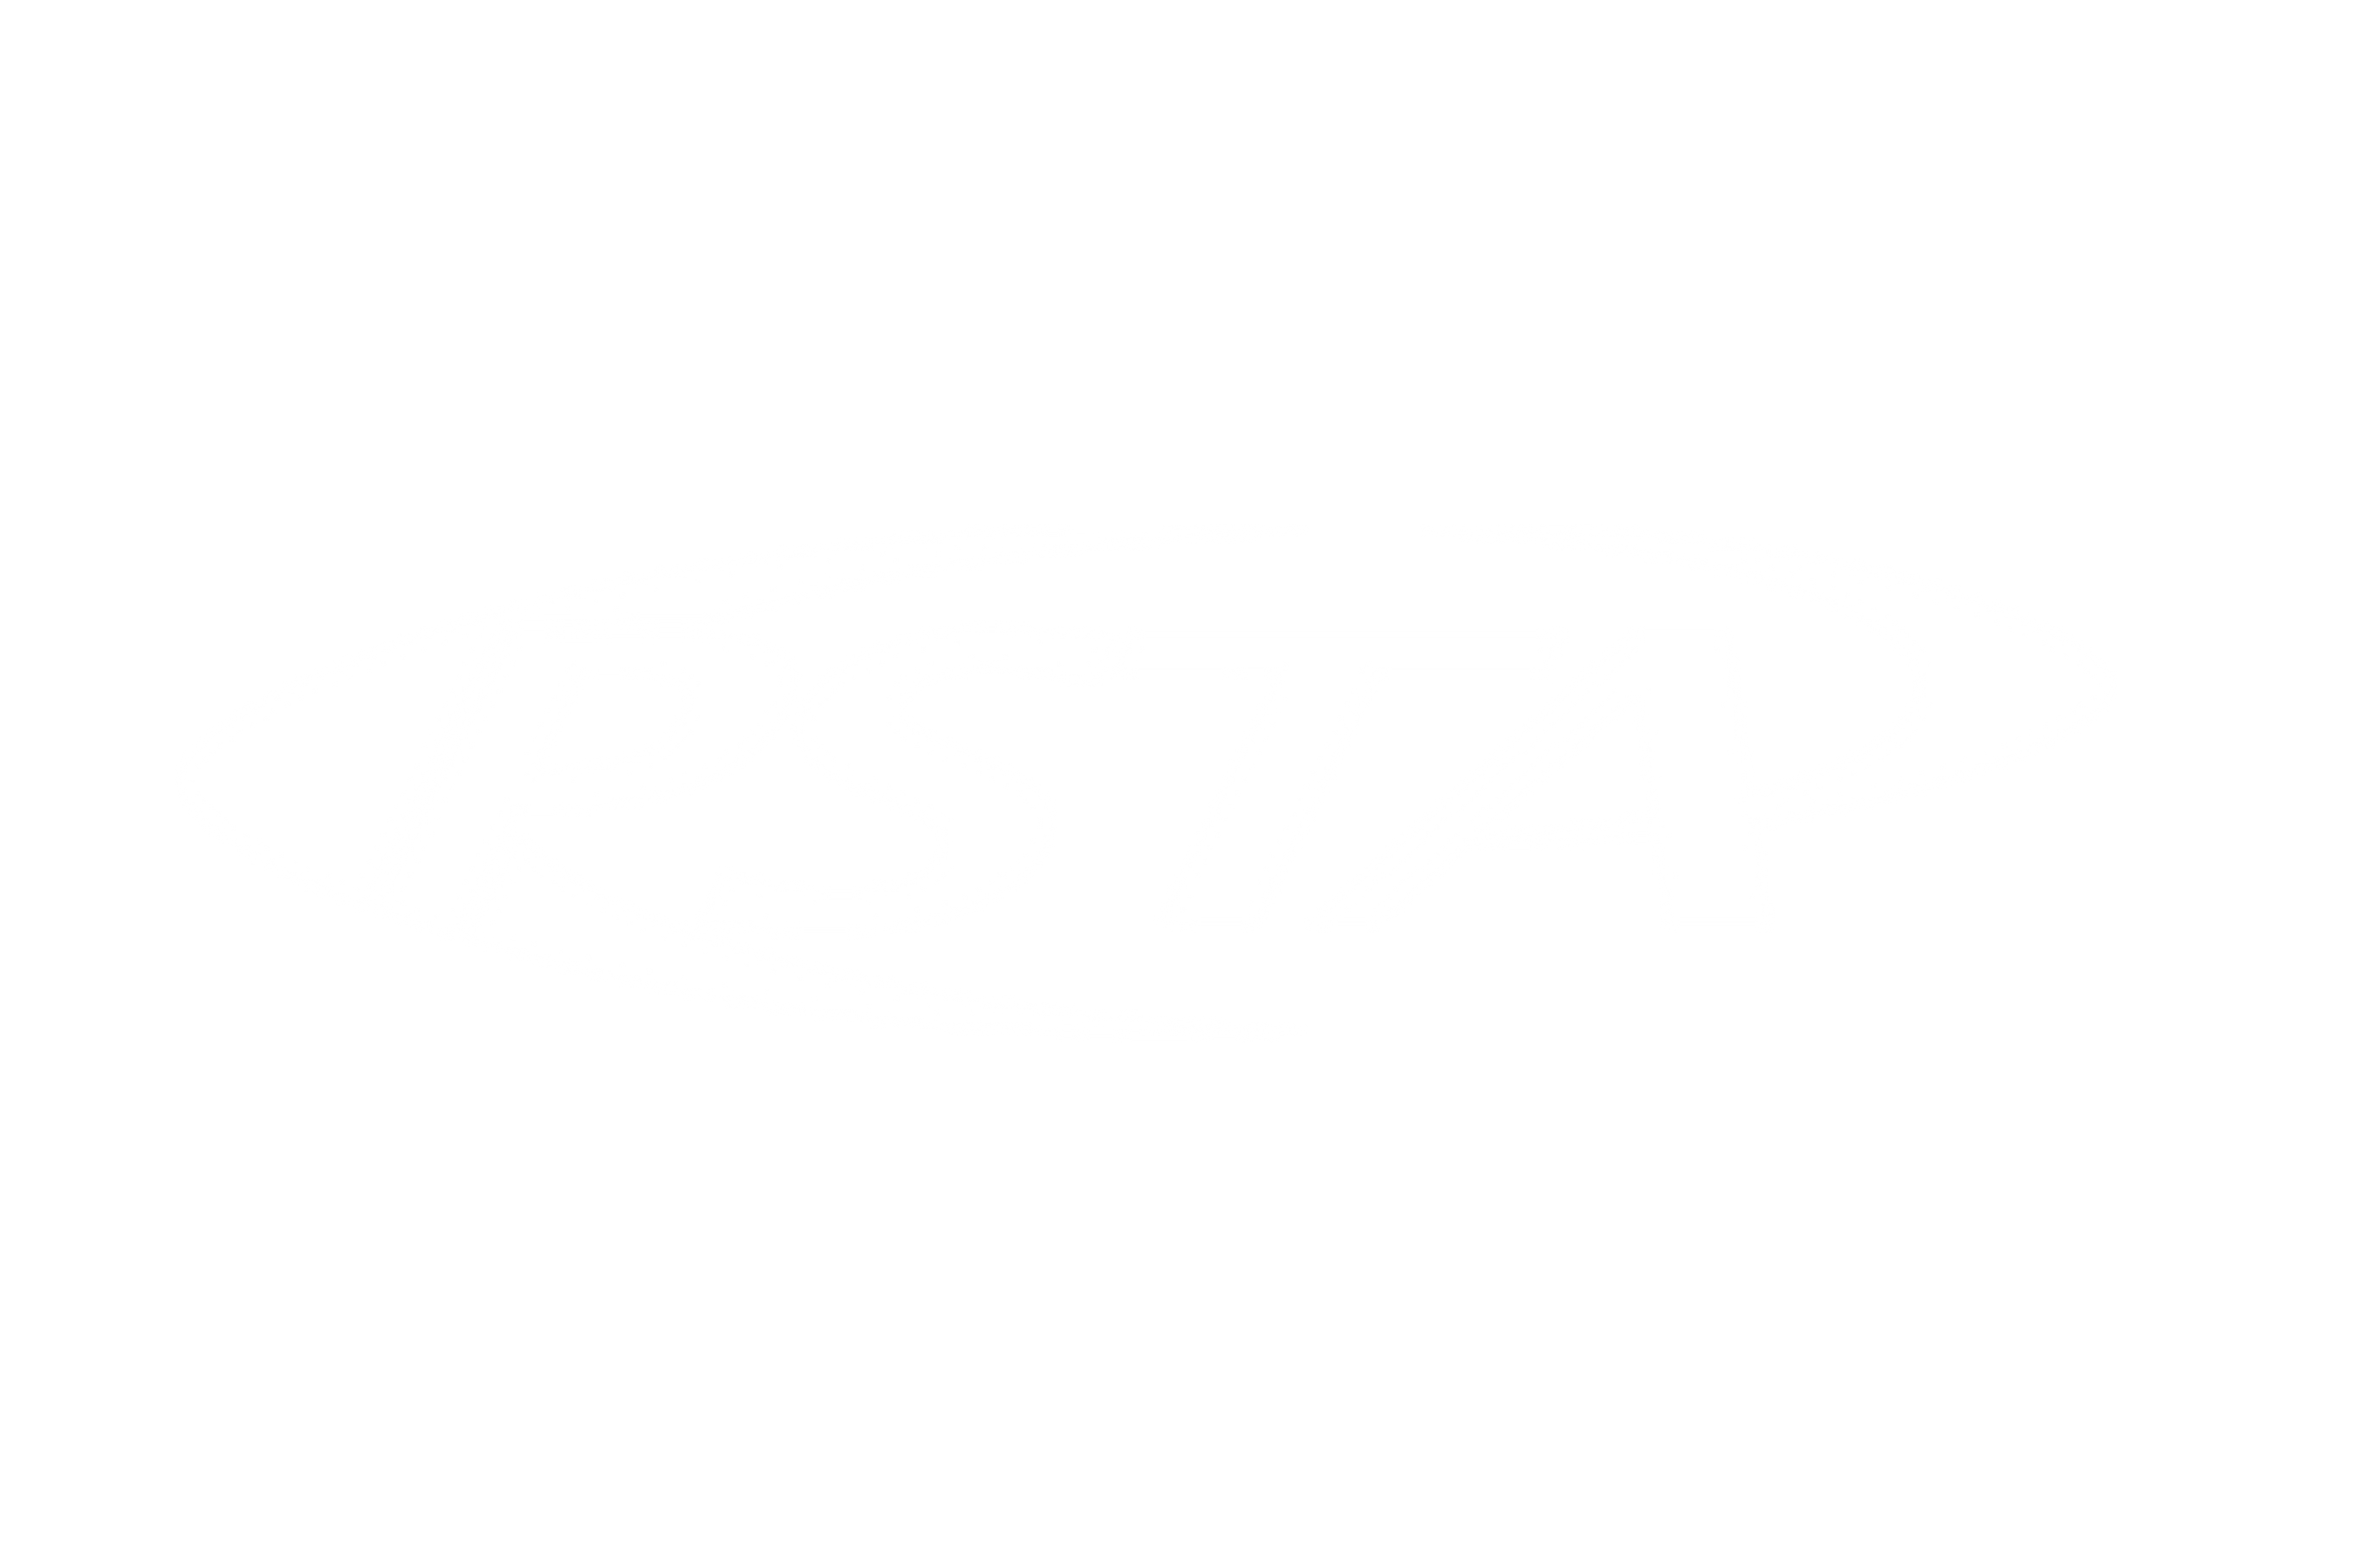 PSTA logo